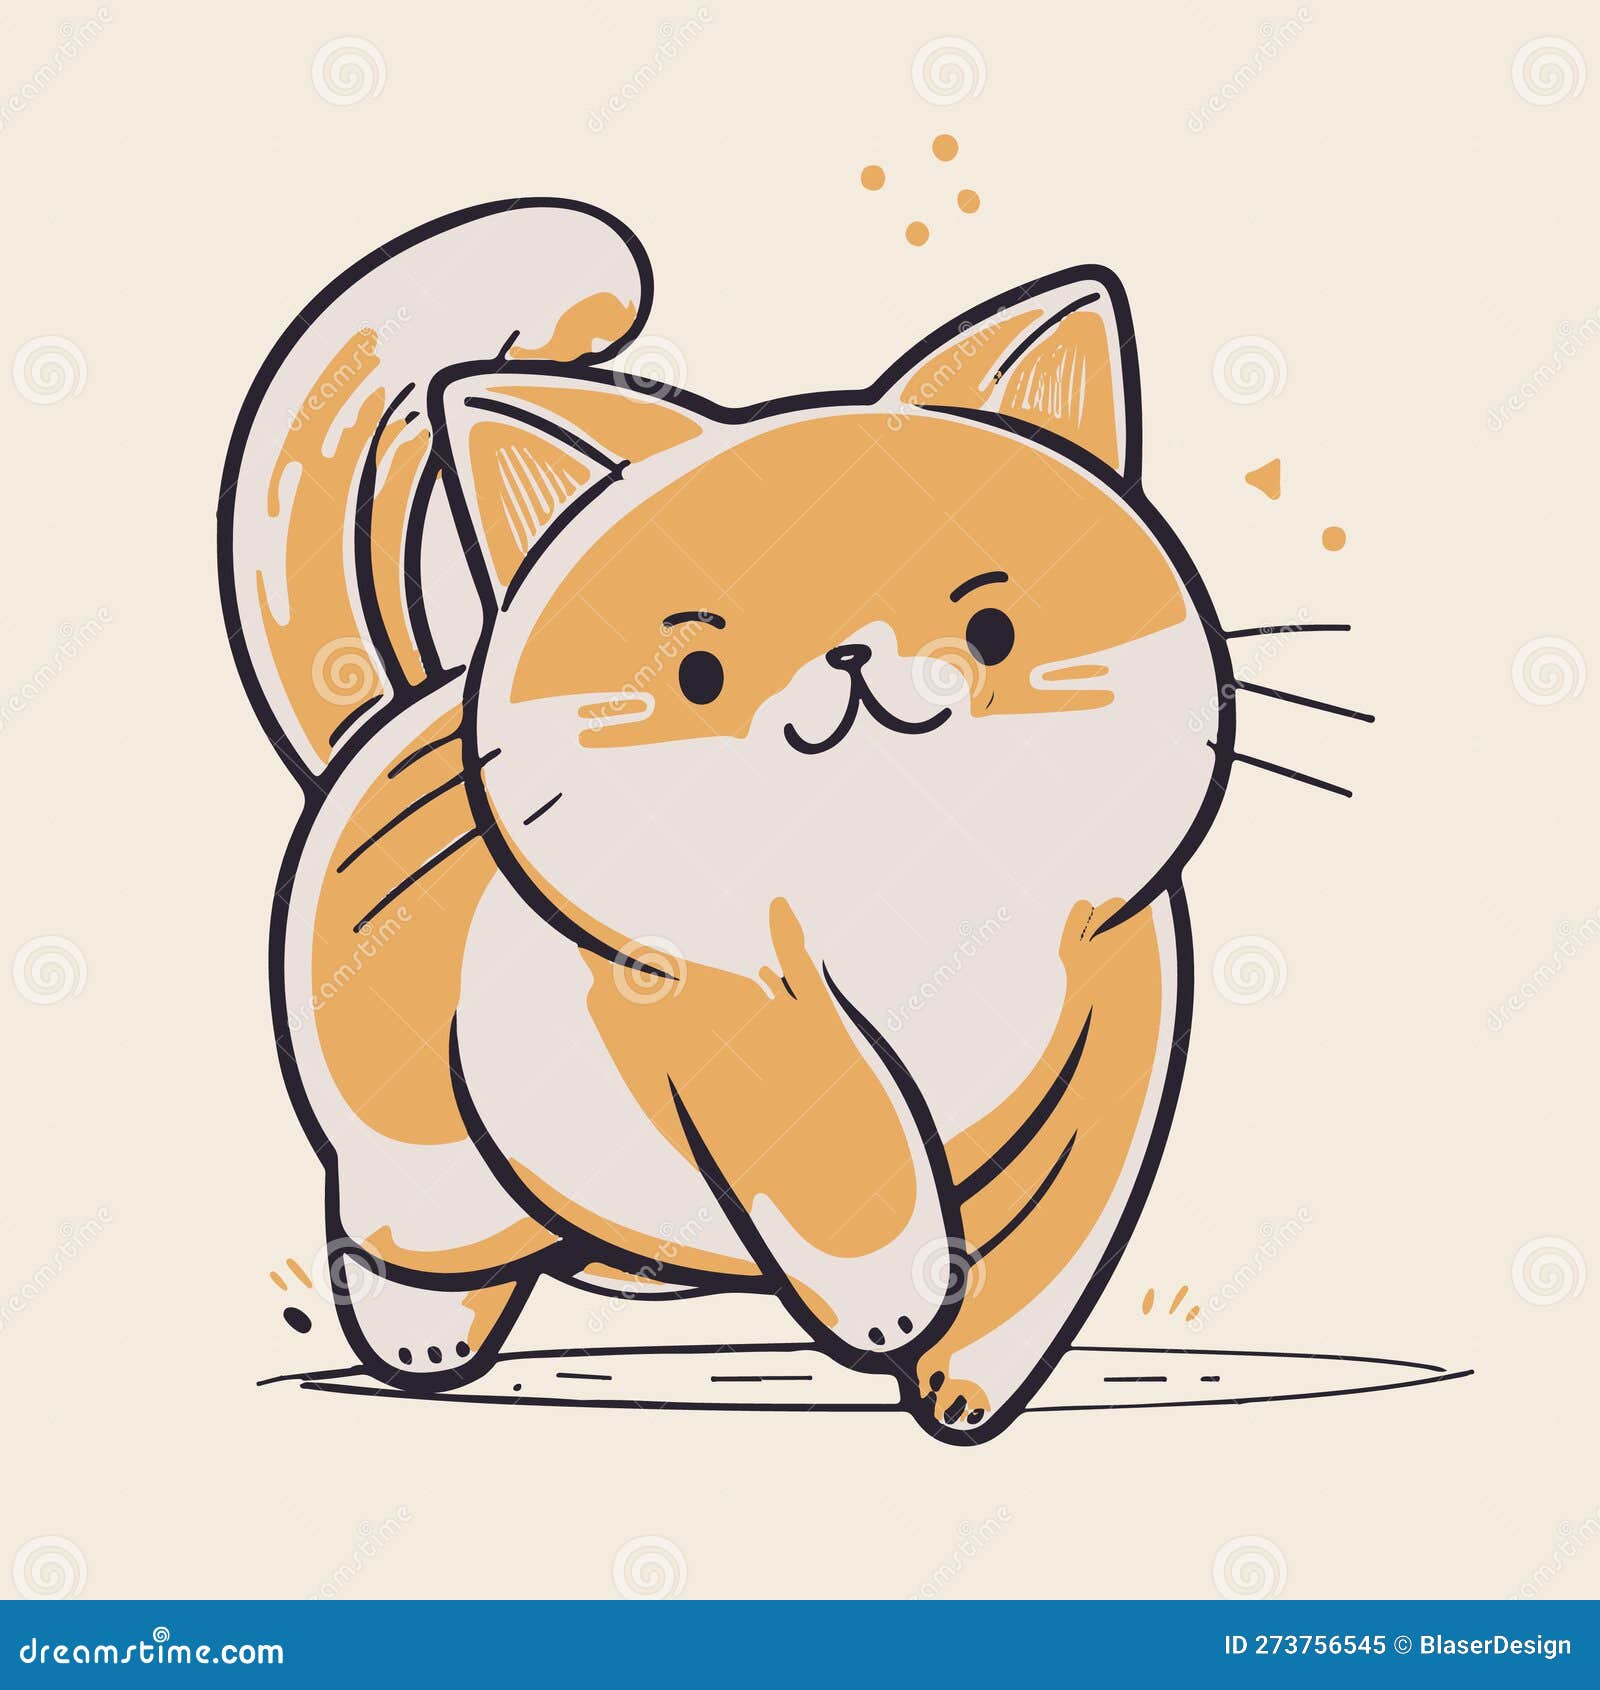 Adorable Fun Cartoon Cat Happy Illustration of Kitty Fun Vector Art  Doodle Stock Vector  Illustration of vector collection 273756545